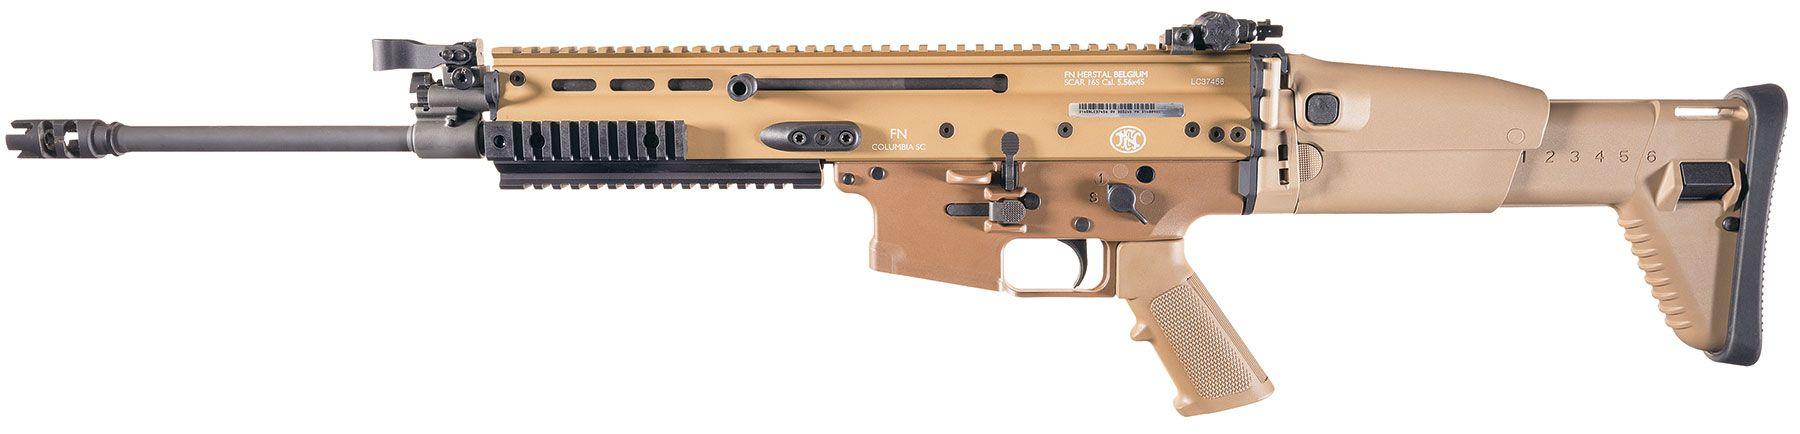 Desirable Fabrique Nationale SCAR-16s Semi-Automatic Rifle